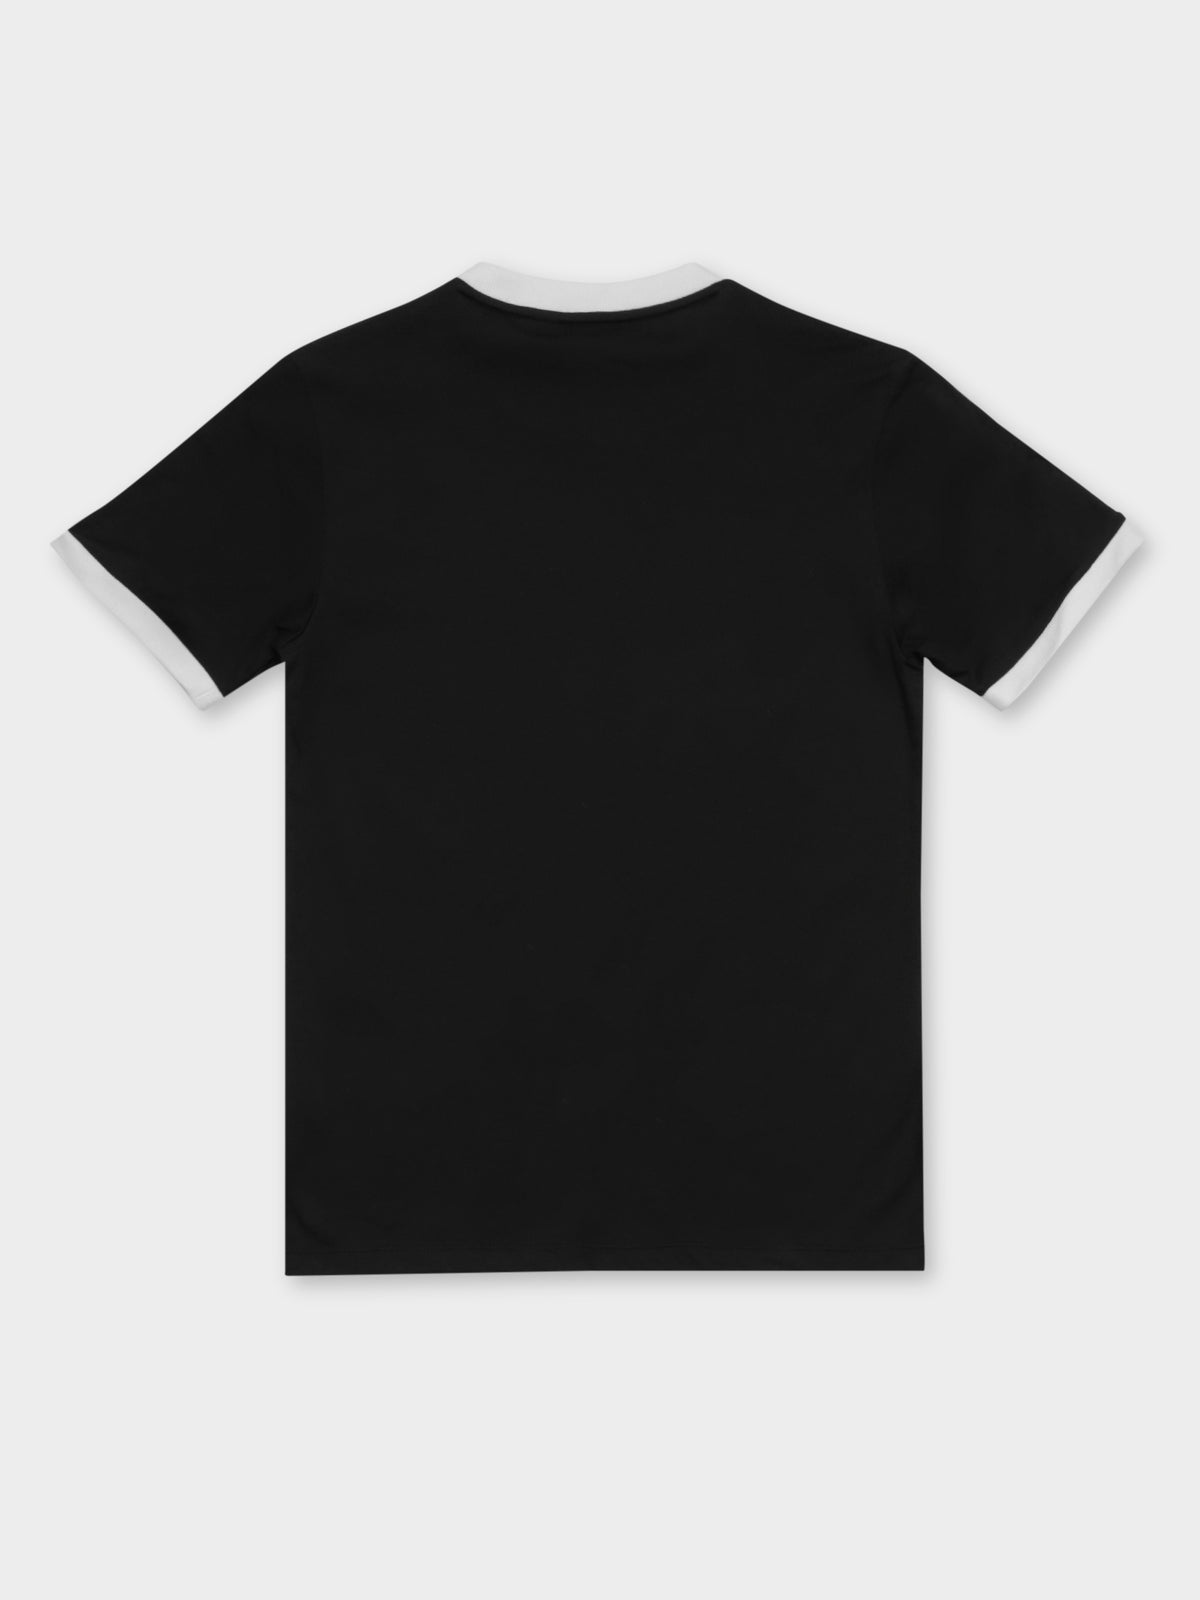 Adicolor Classics 3-Stripes T-Shirt in Black